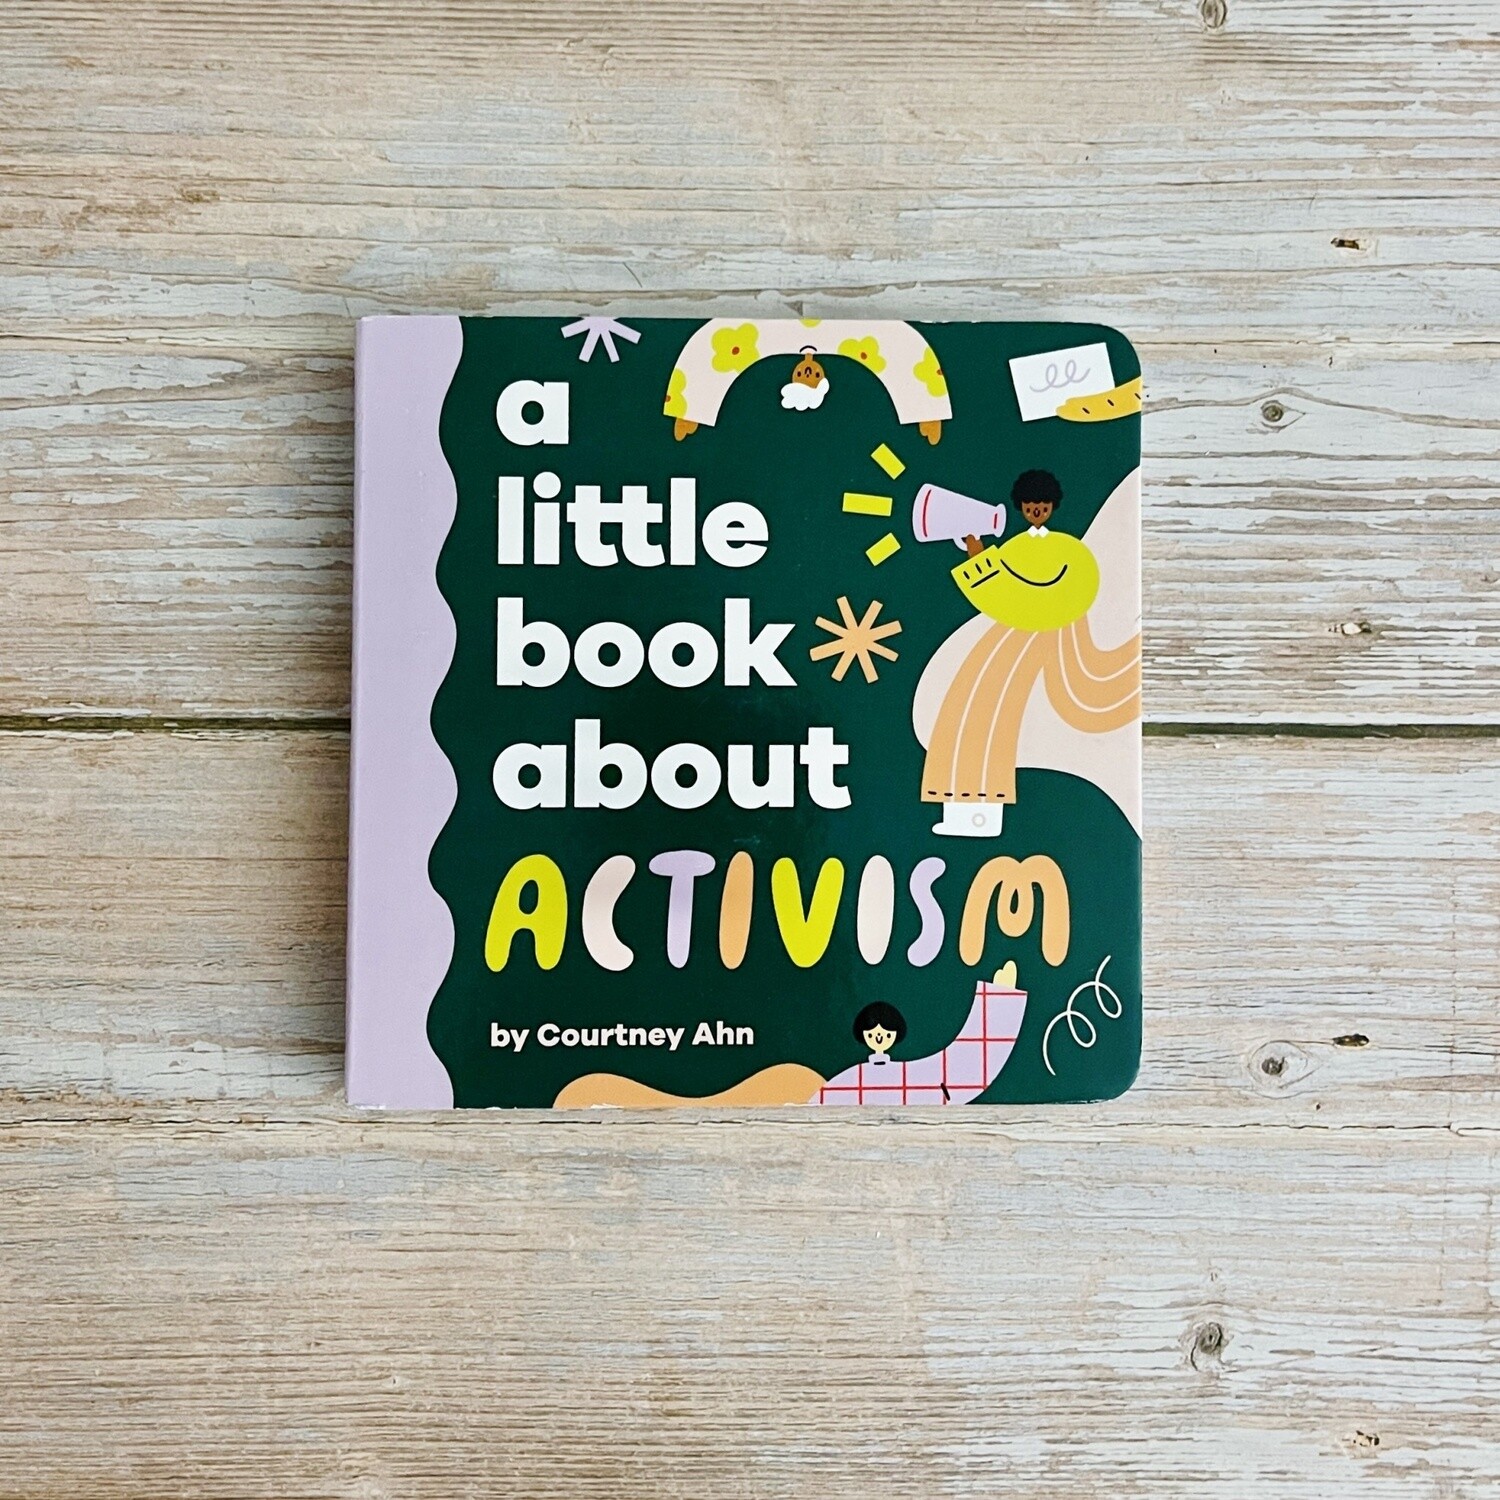 A Little Book About Activism